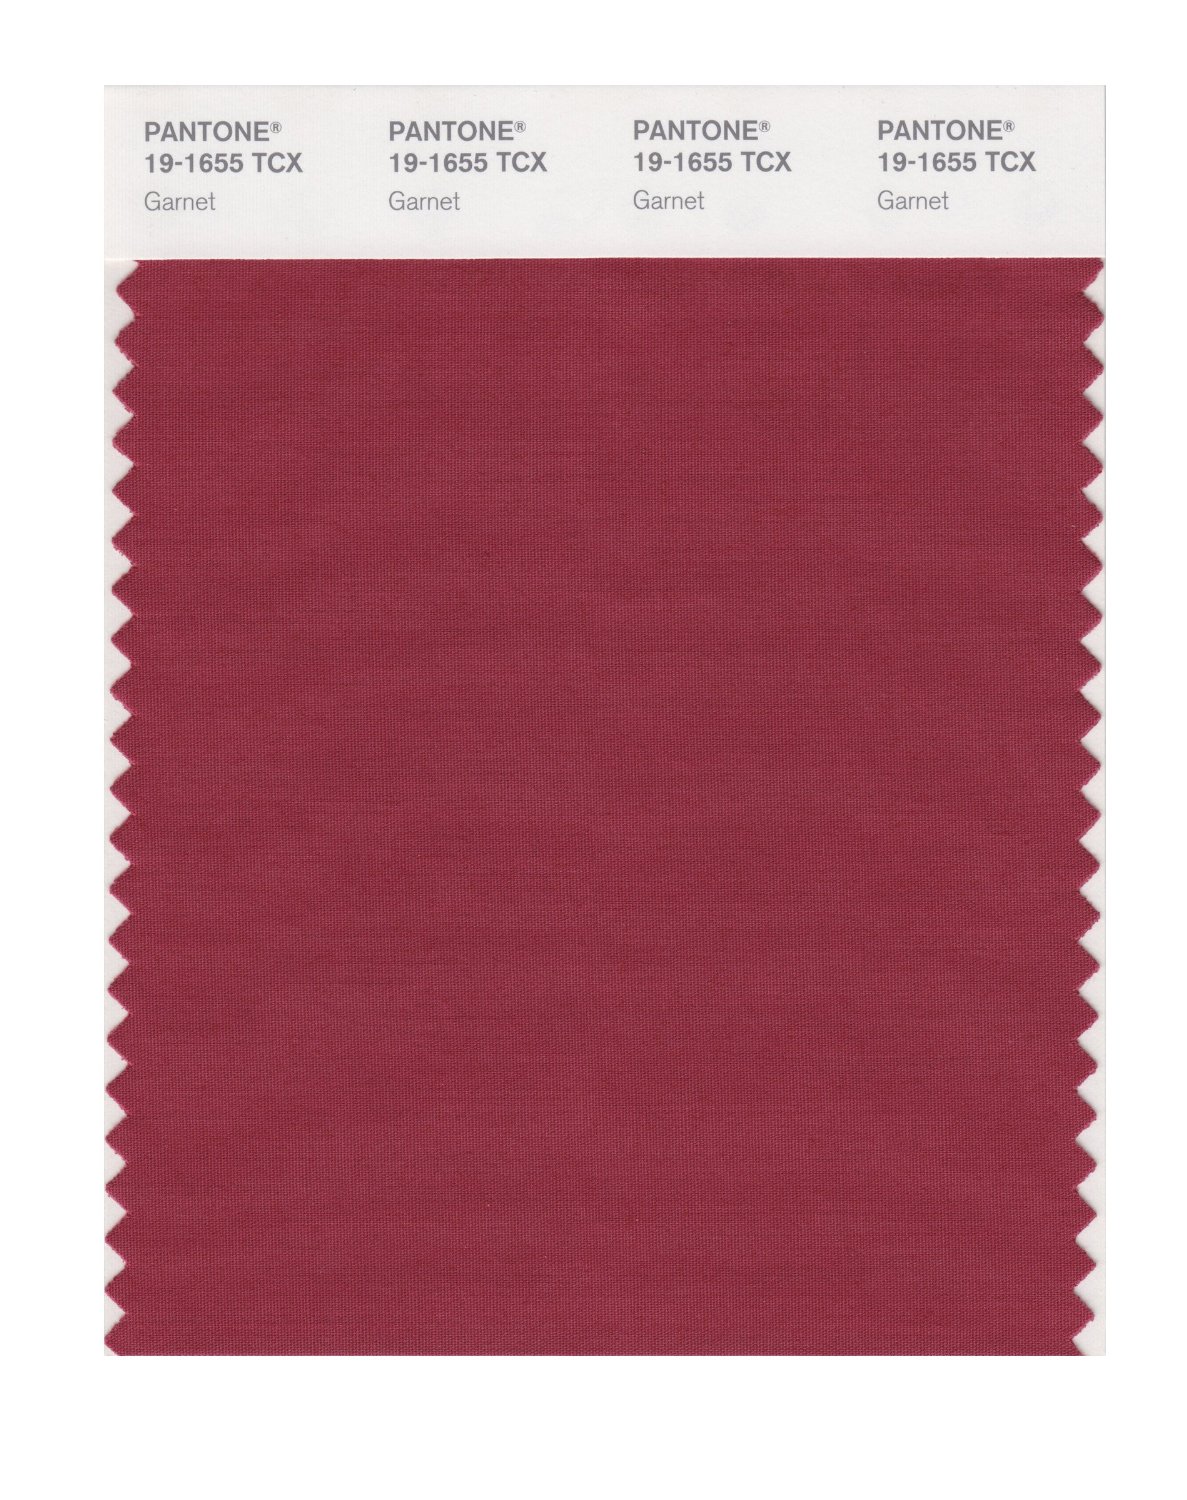 Pantone Cotton Swatch 19-1655 Garnet